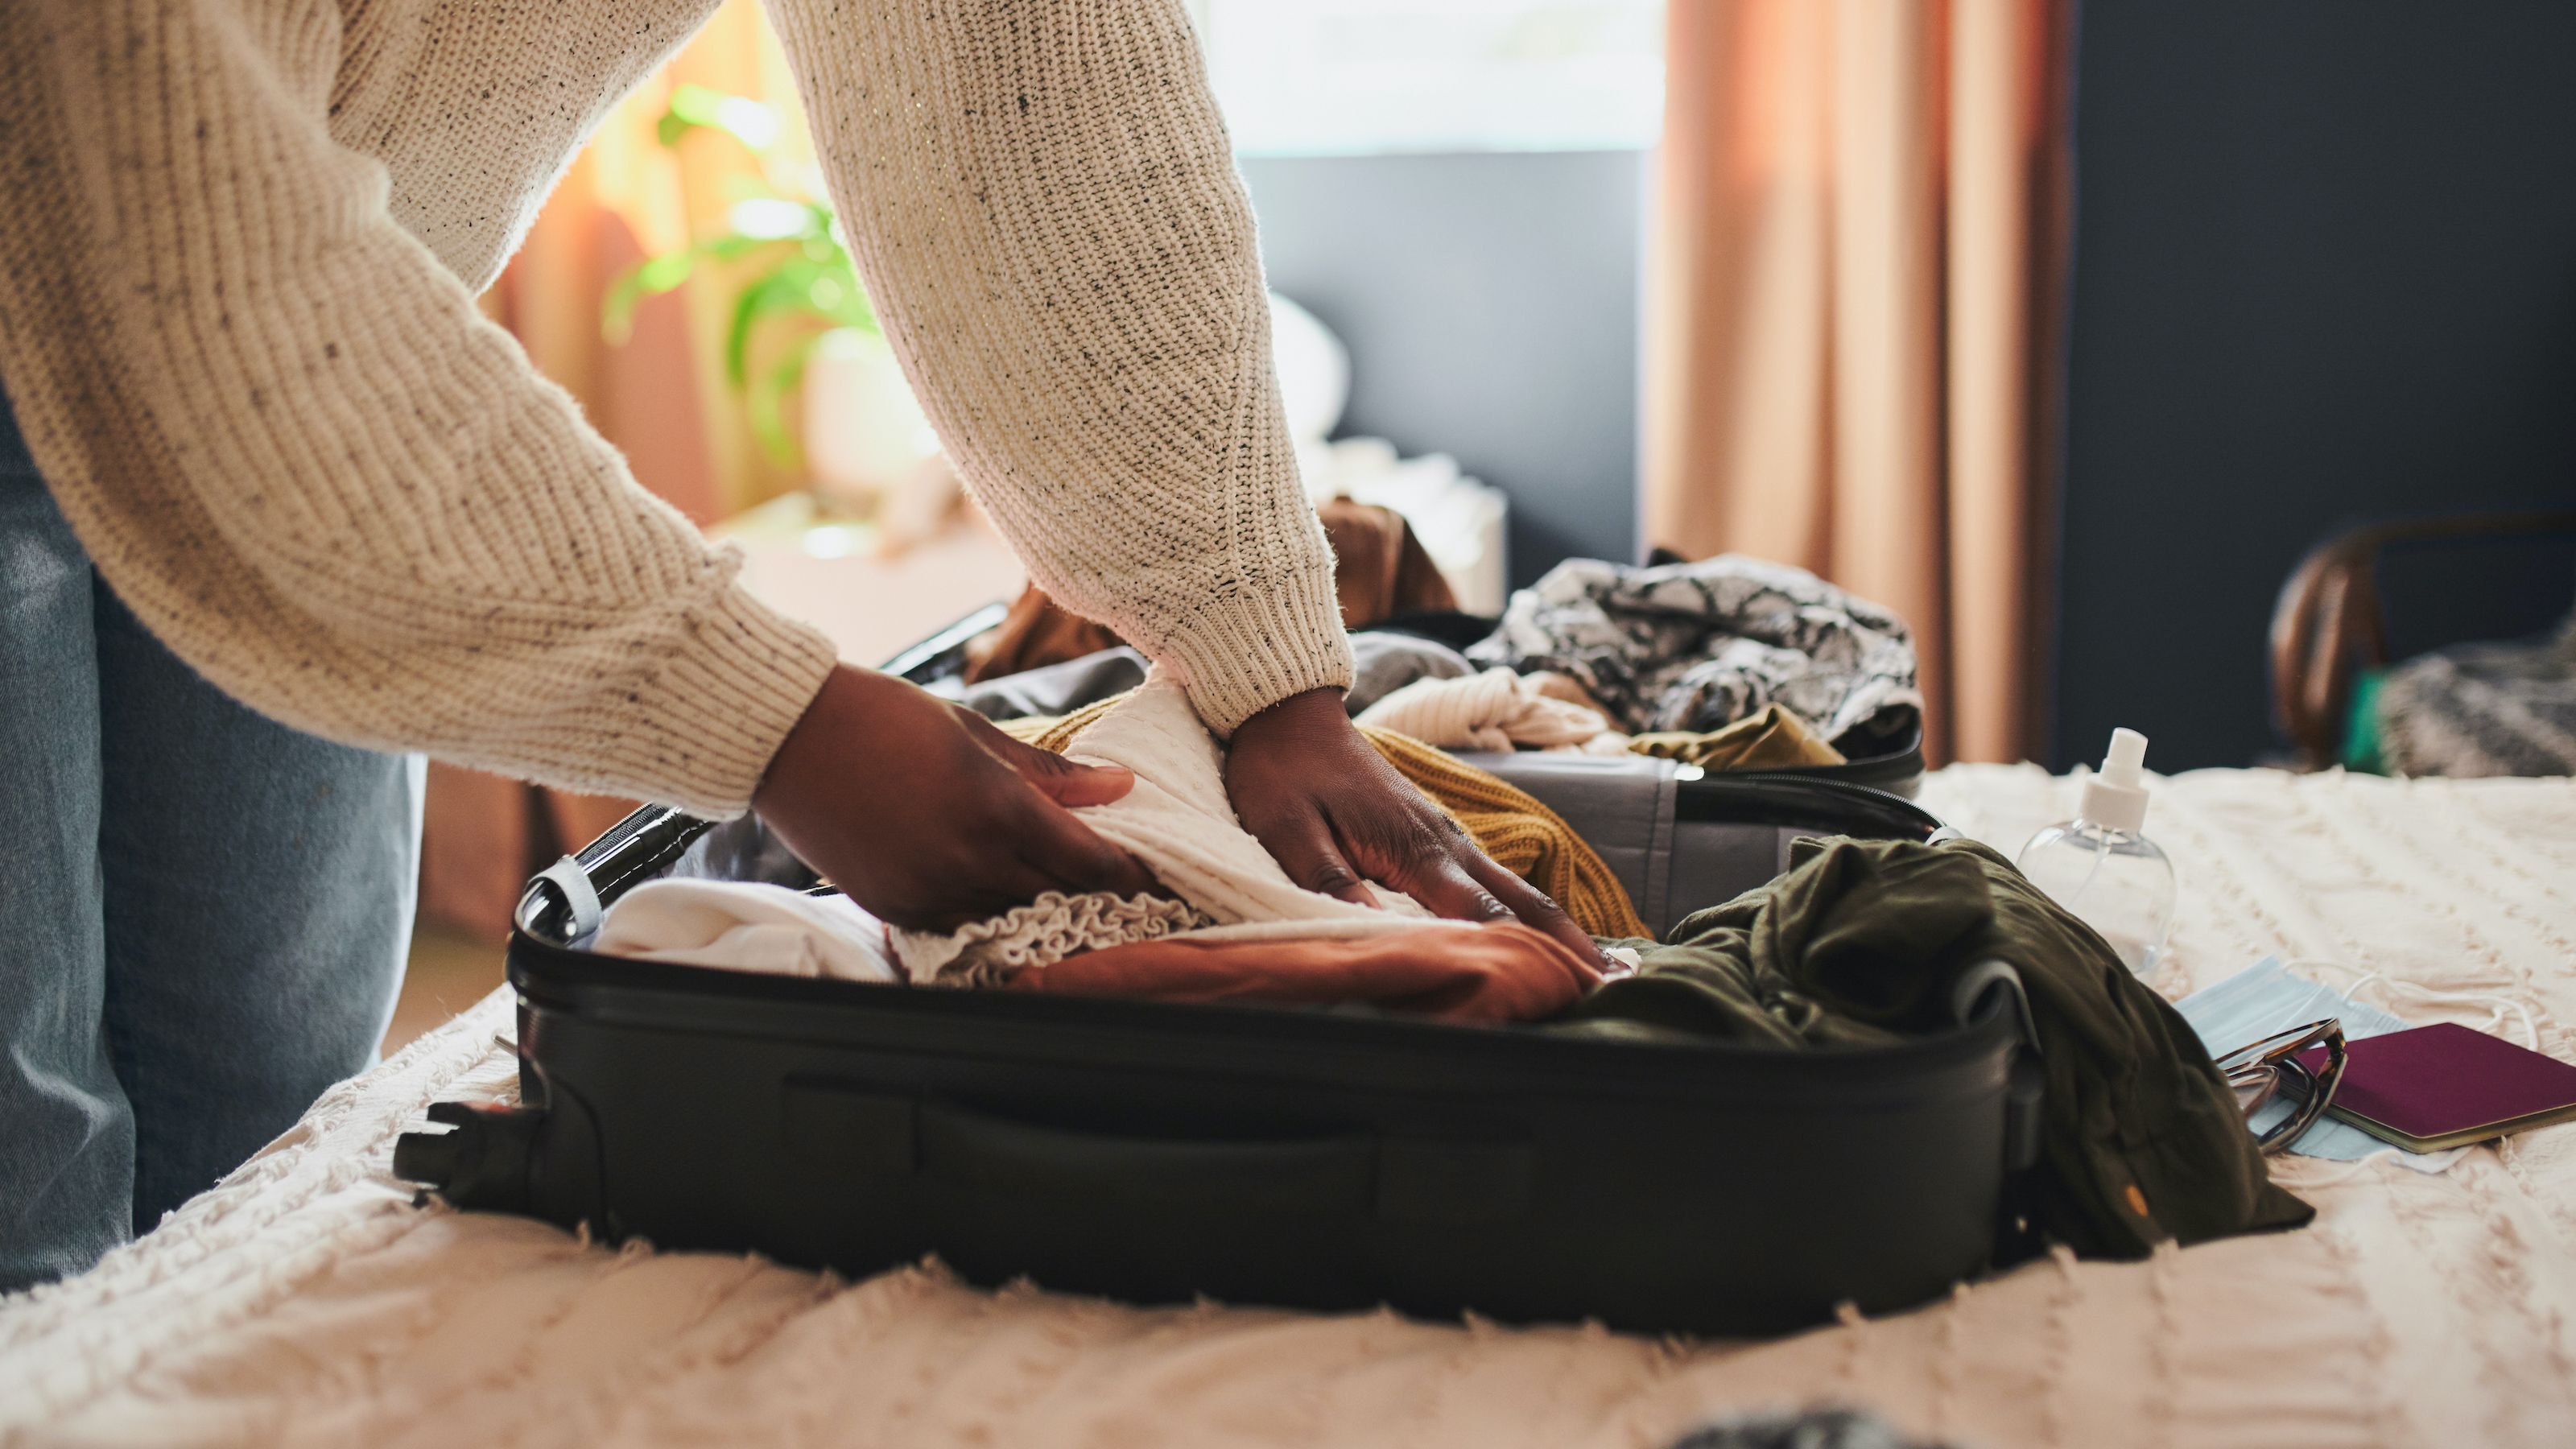 Travel Essentials & Travel Must Haves - Travel Blanket Travel Accessories - Airplane  Travel Essentials For Traveling International